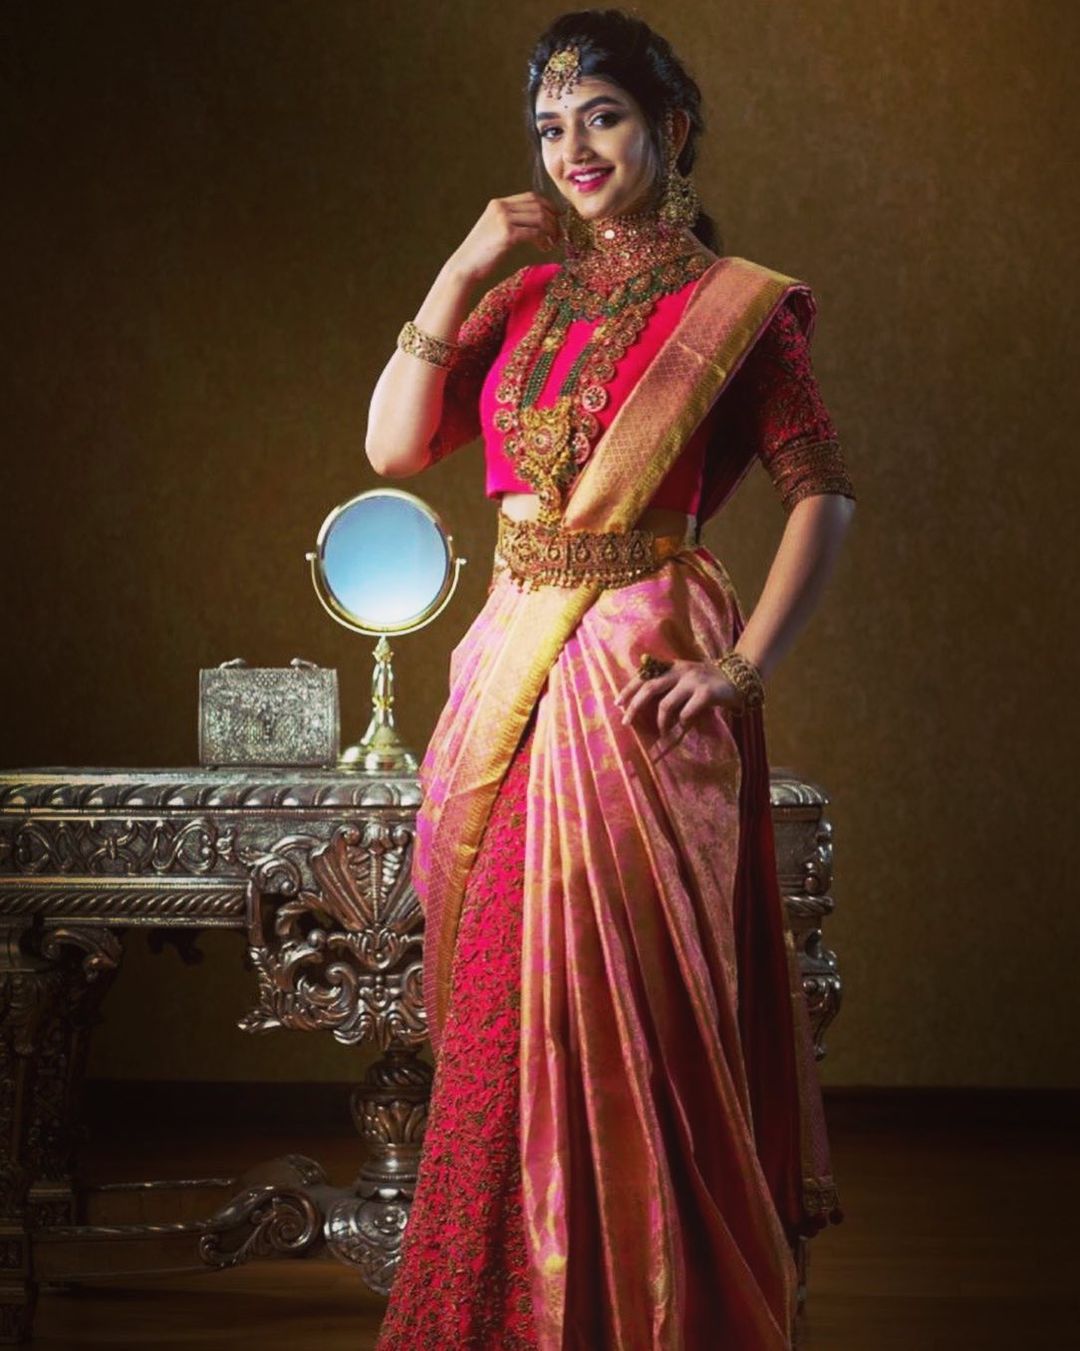 Sreeleela In Kanjivaram Saree With Heavy Jewellery Look Like A Perfect South Indian Bride